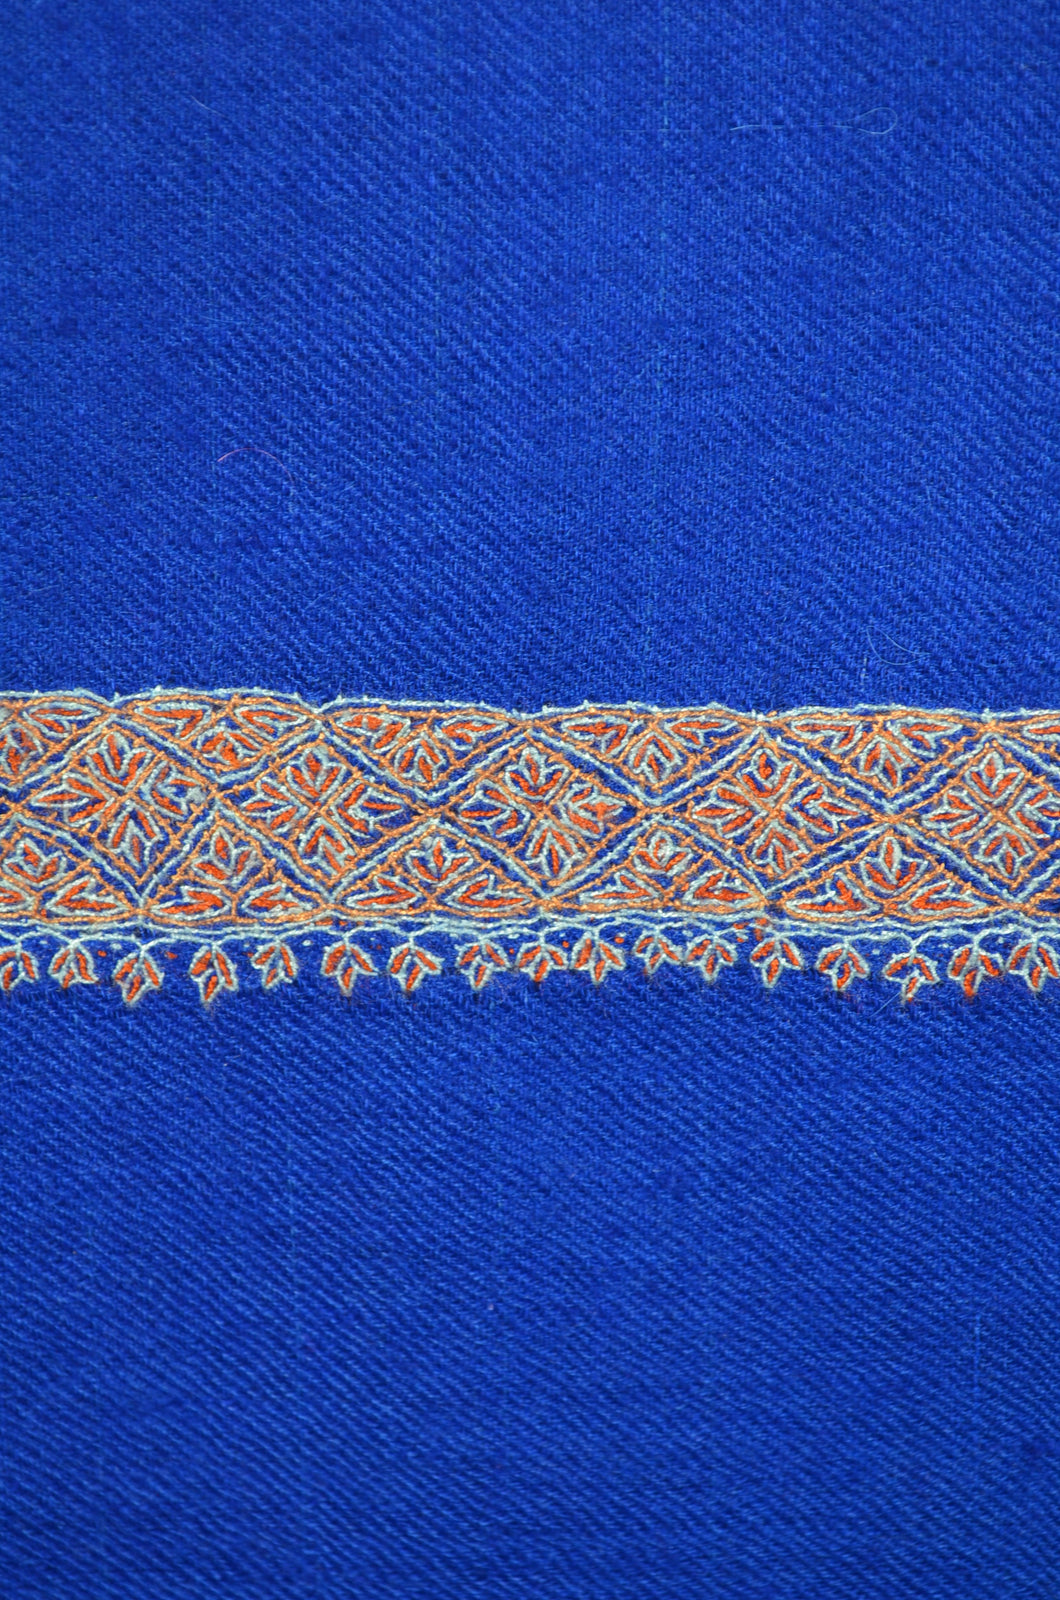 Blue Beldar Border Embroidery Cashmere Pashmina Shawl